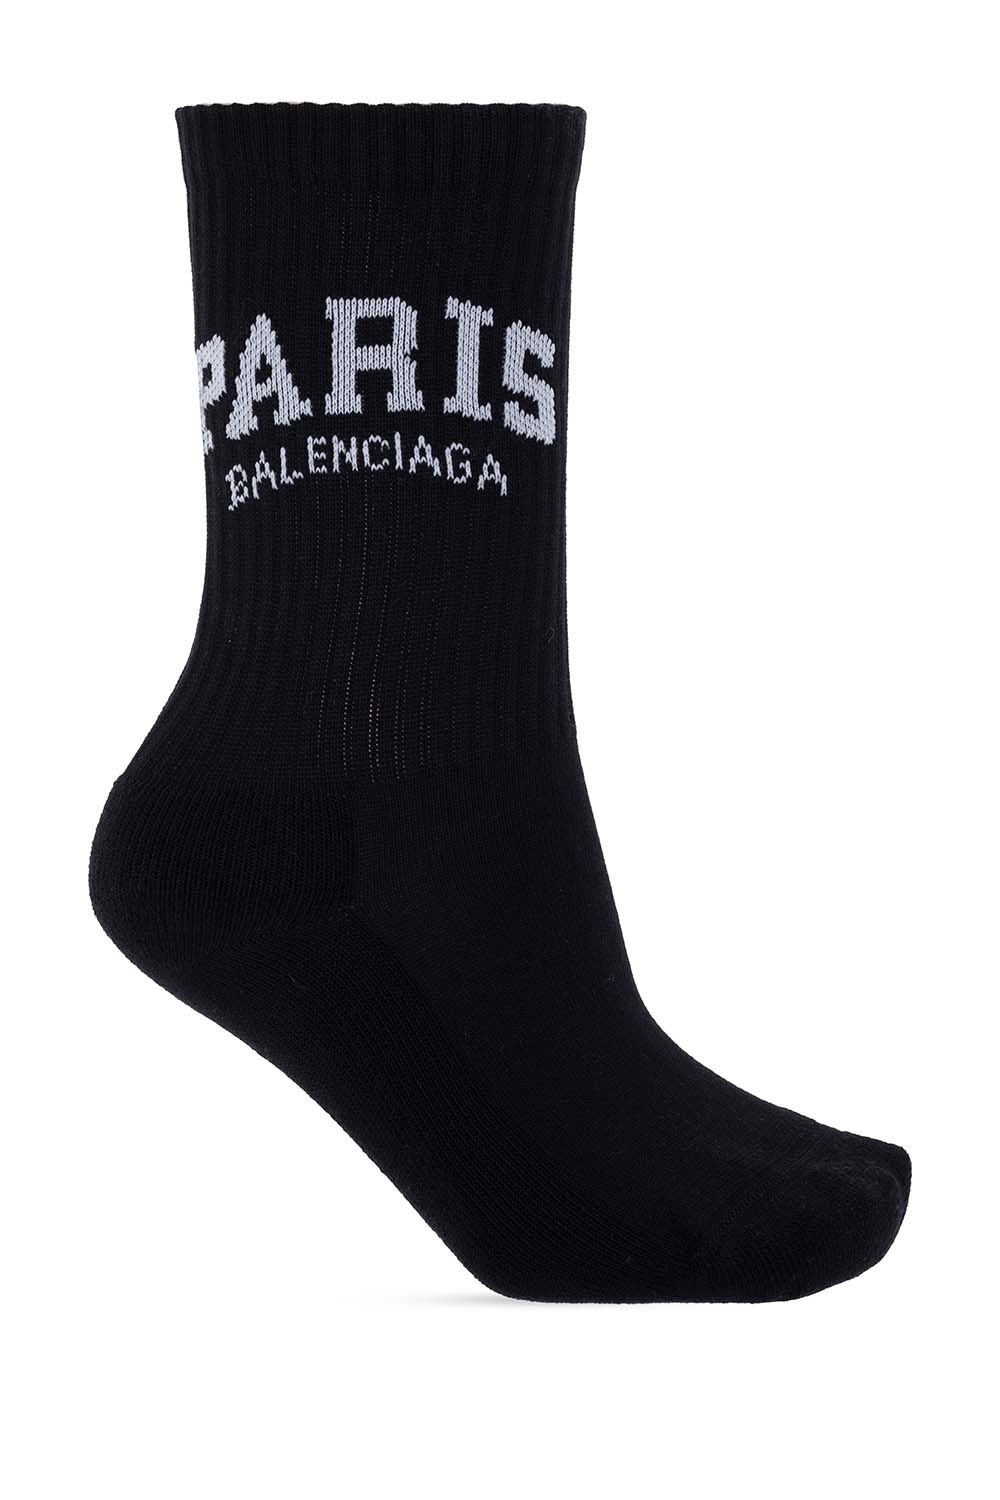 Balenciaga Paris Tennis Socks Black/White